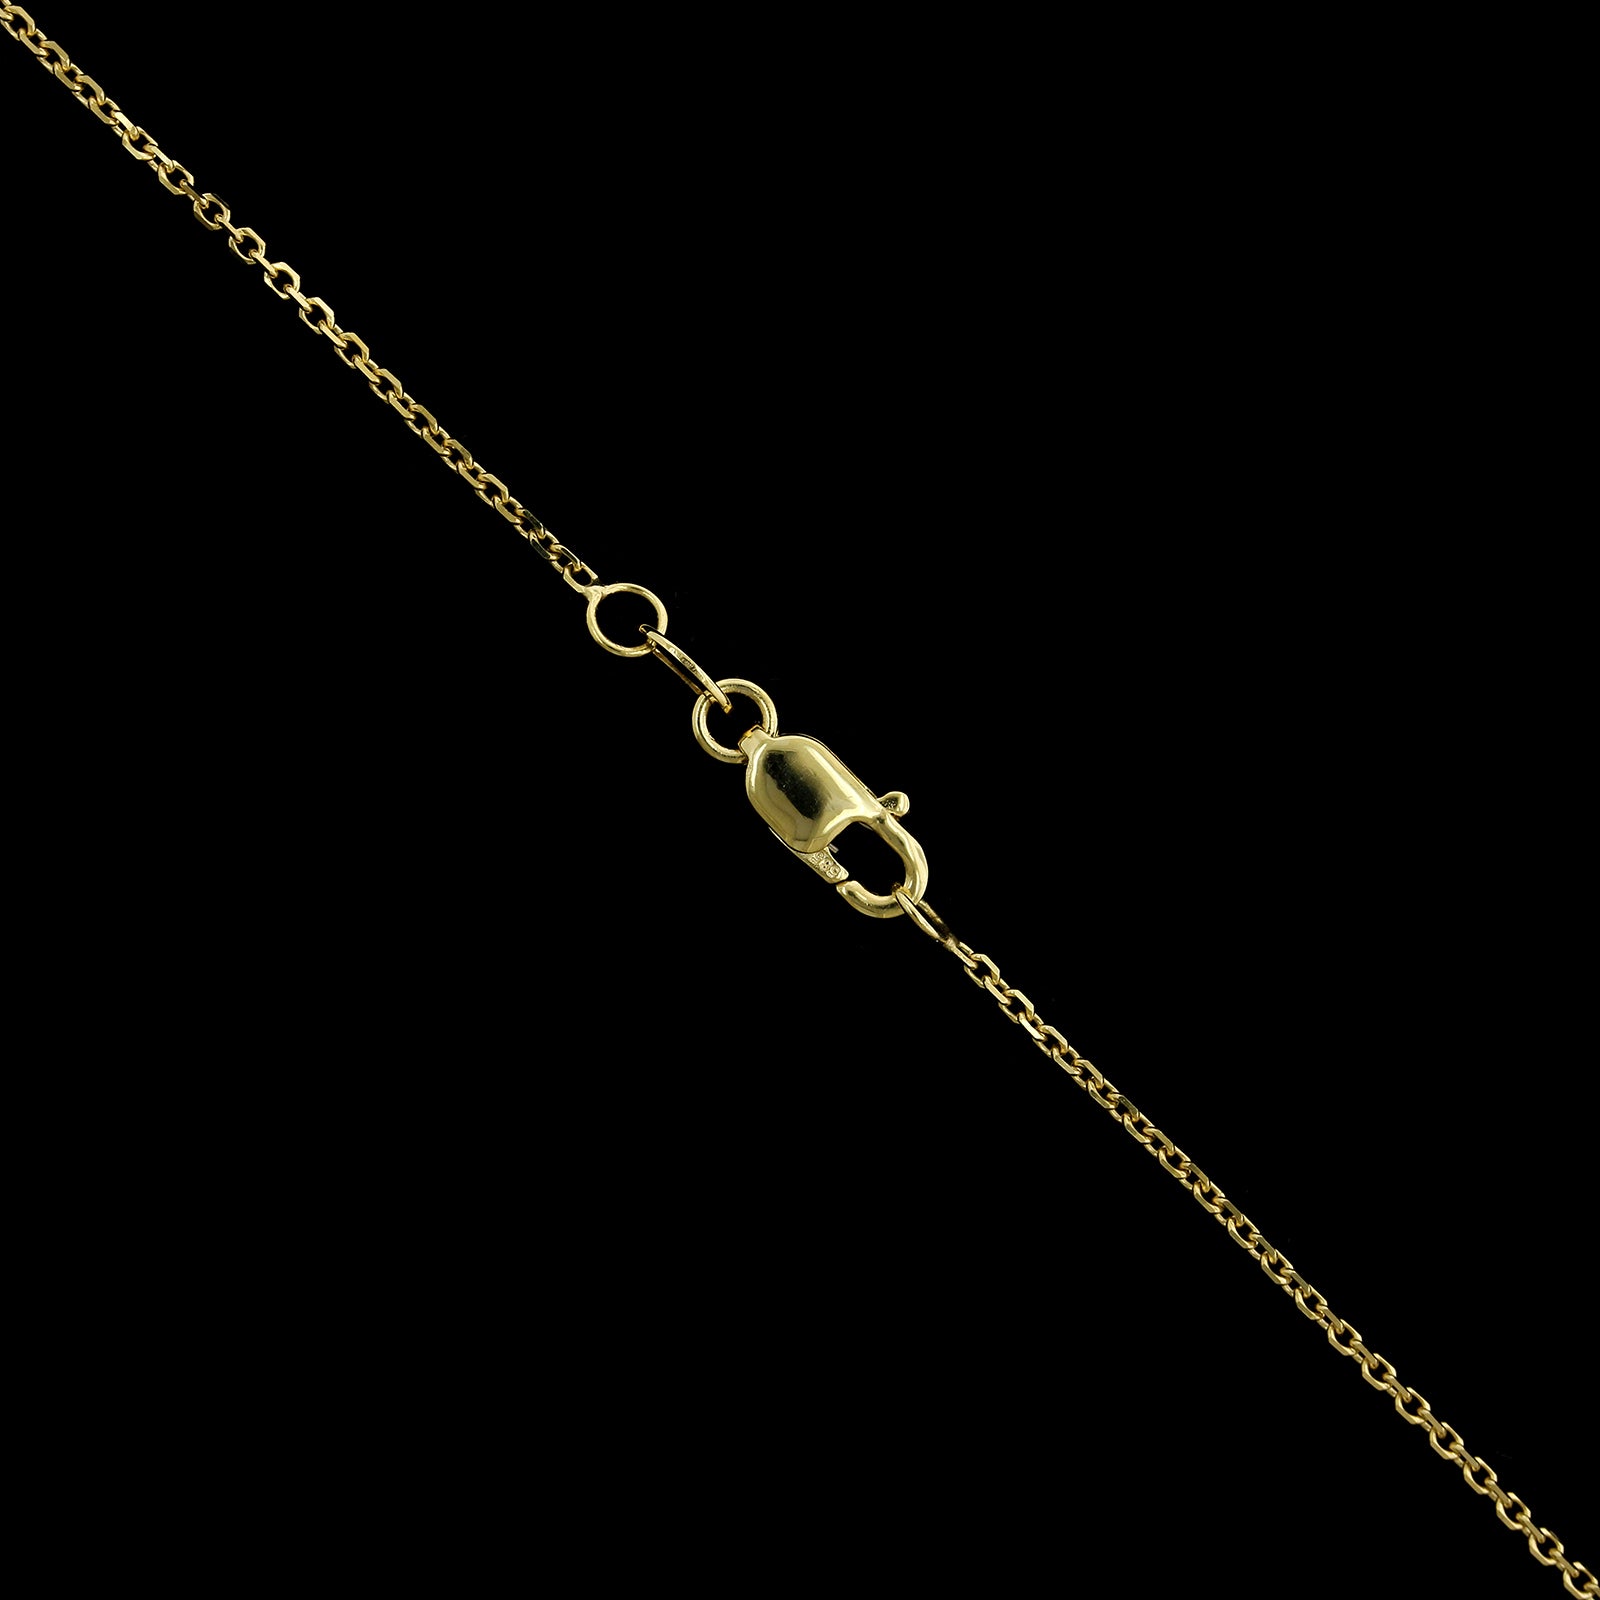 14K Yellow Gold Estate Diamond Heart Pendant Necklace